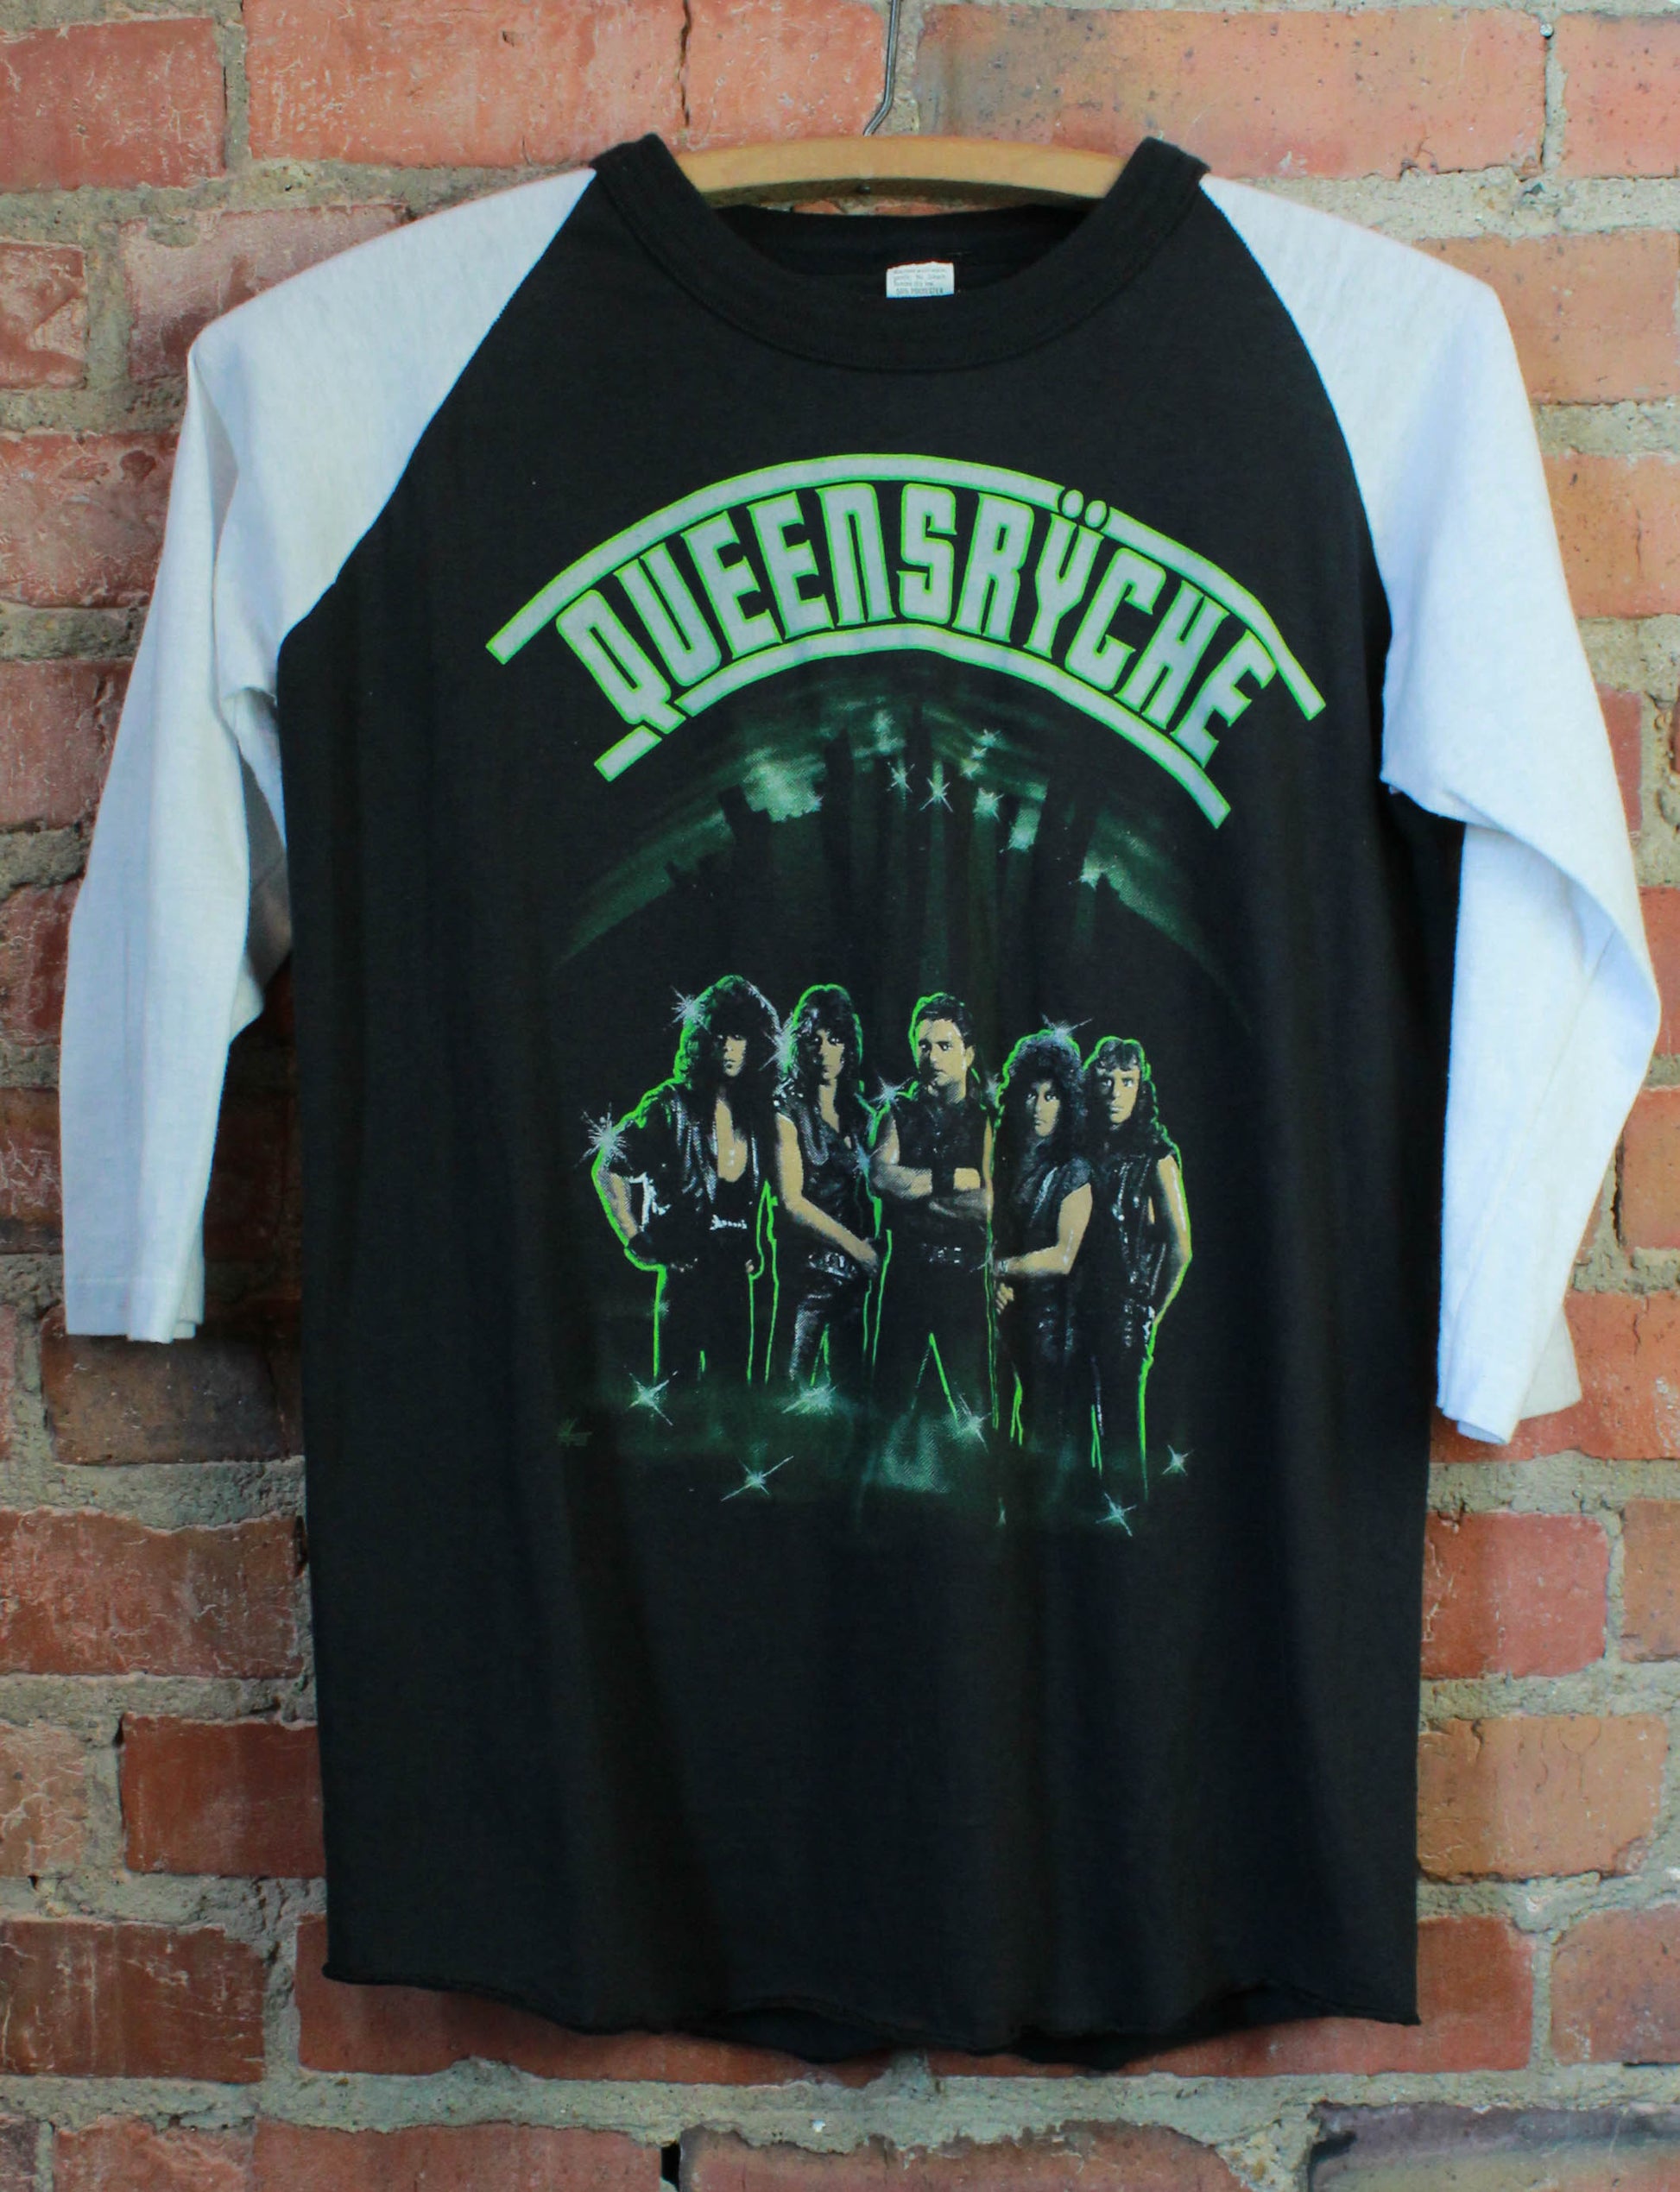 Vintage 1985 Queensryche Concert T Shirt The Warning Tour Raglan Jersey Black Unisex Small